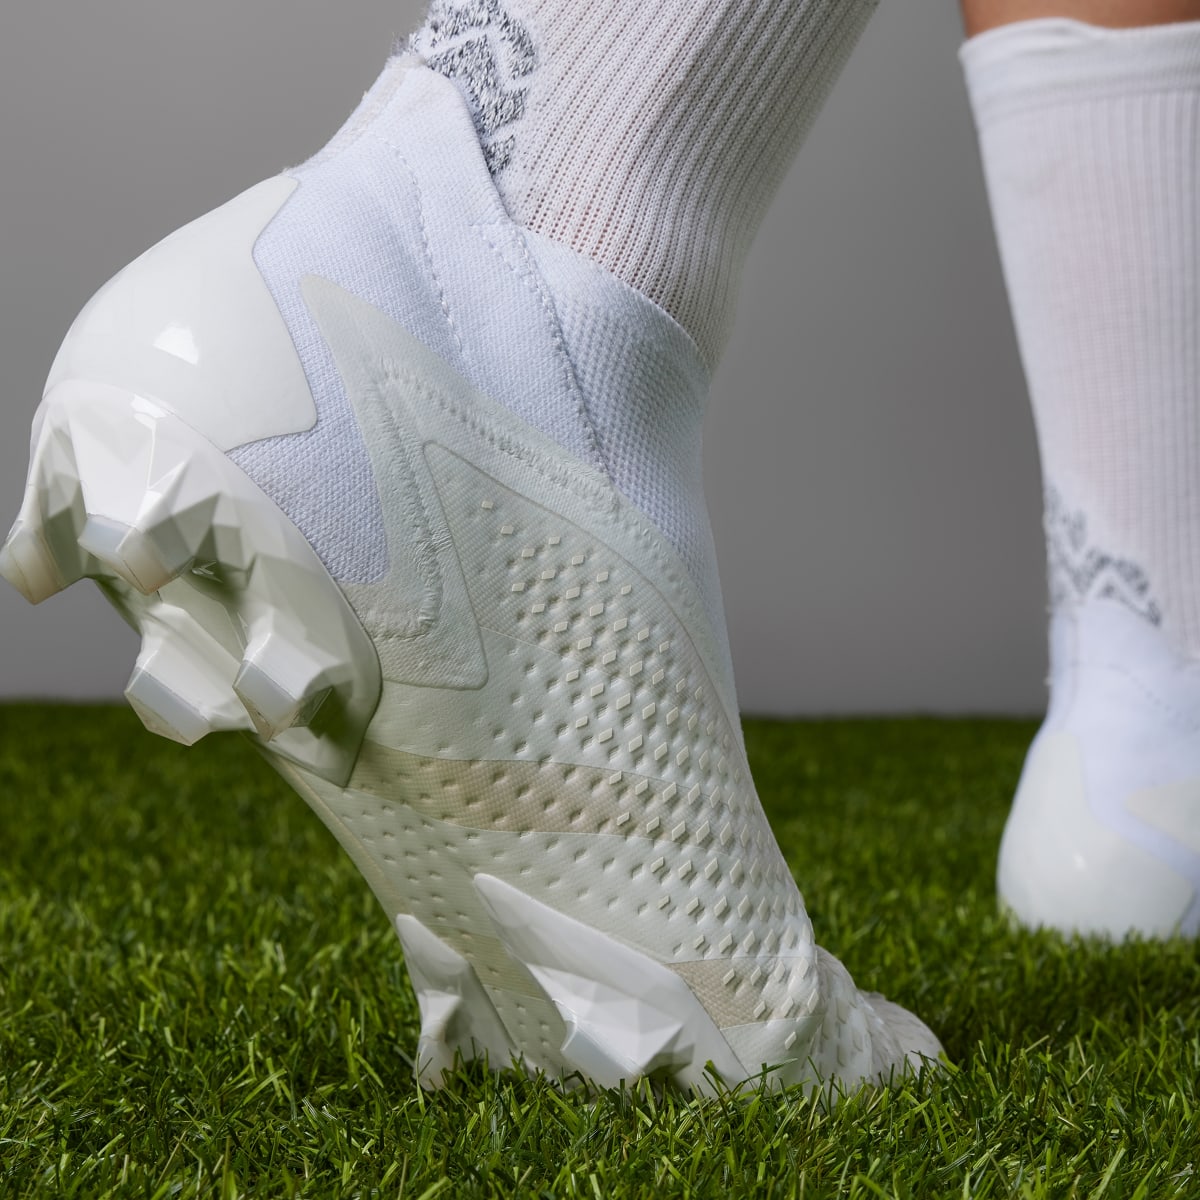 Adidas Botas de Futebol Predator Accuracy+ – Piso firme. 8